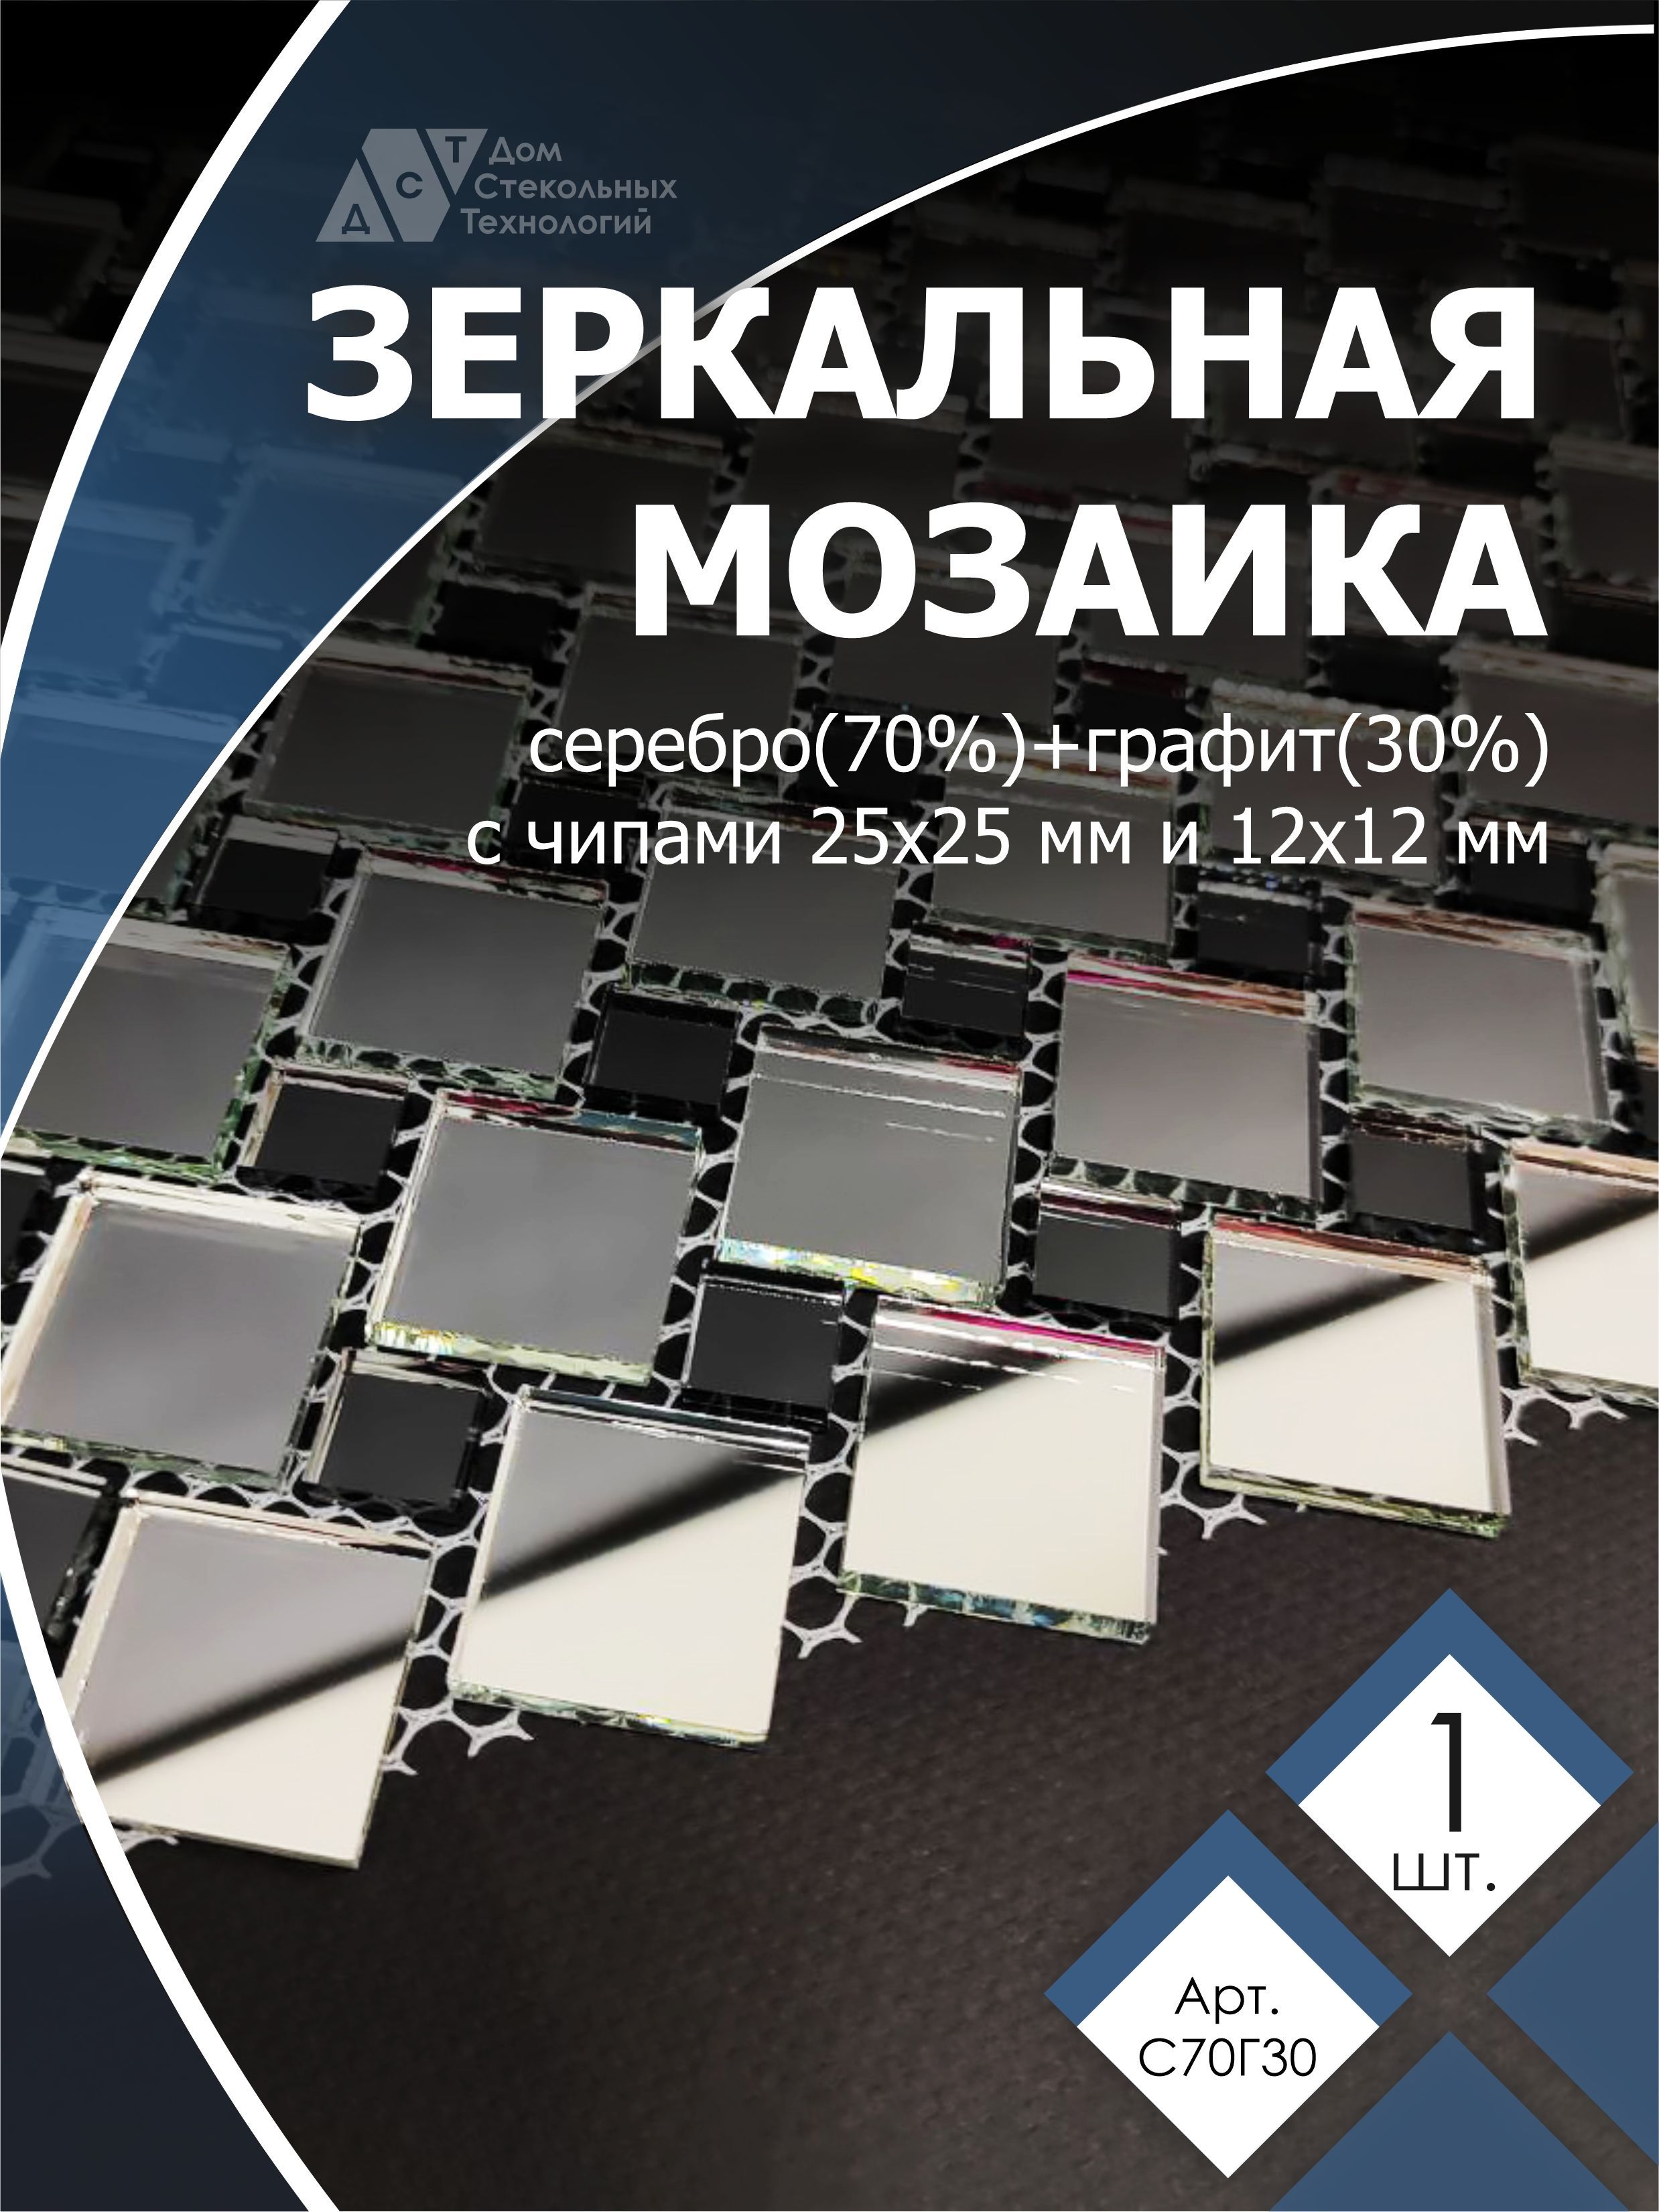 Зеркальная мозаика на сетке, ДСТ, 300х300 мм, серебро 70%, графит 30% (1 лист)